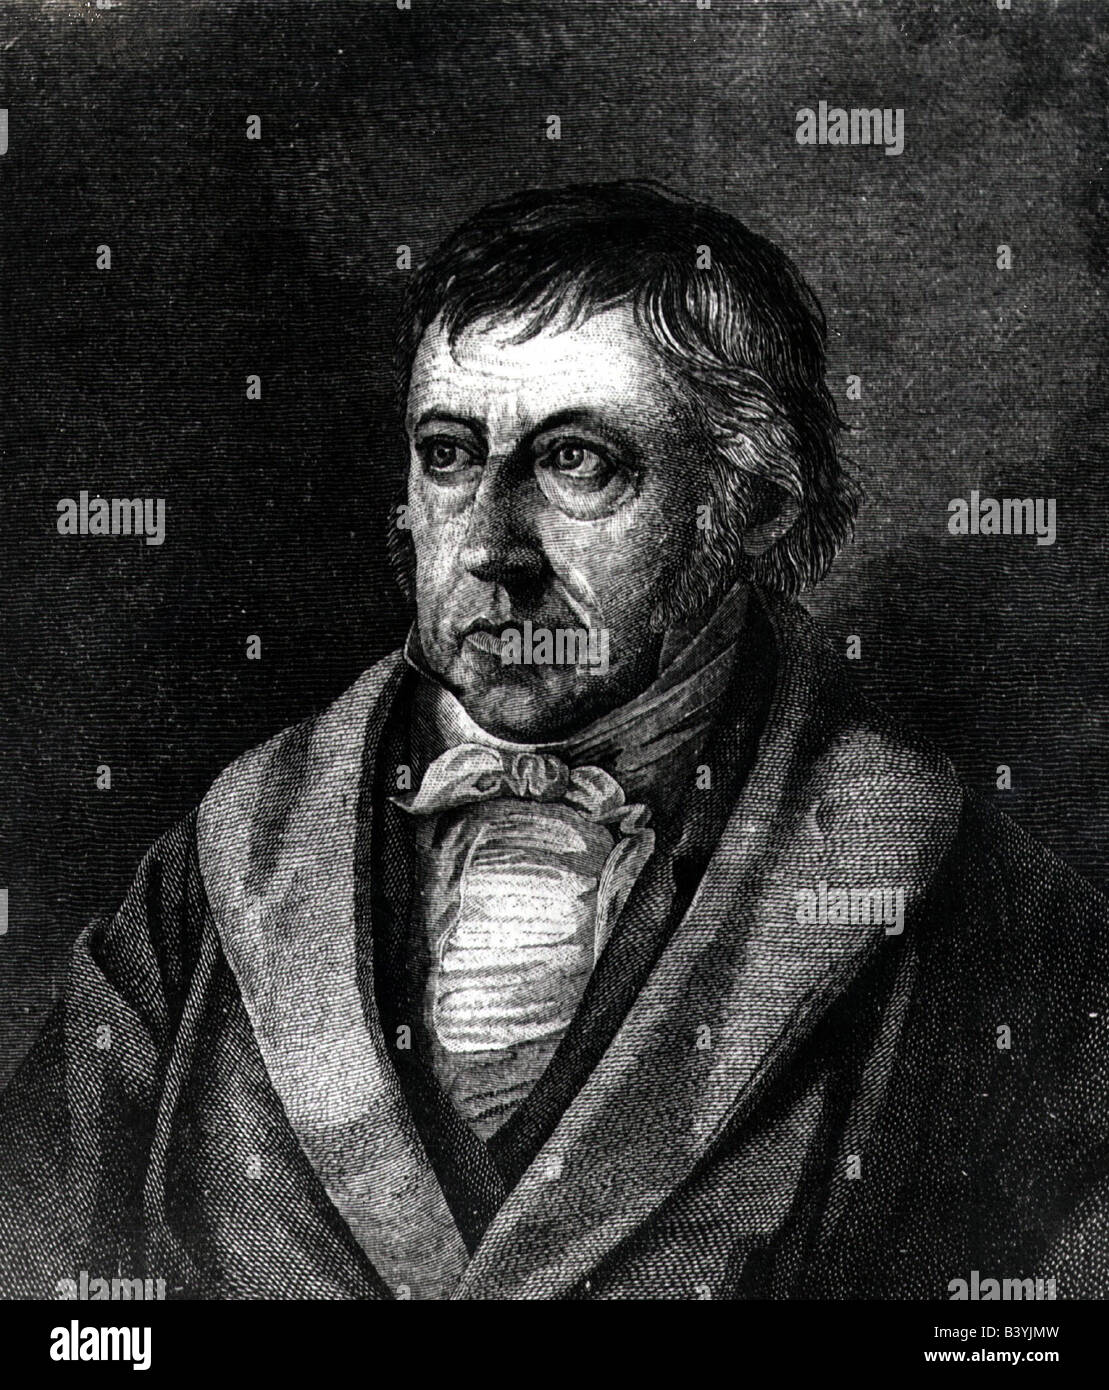 Hegel, Georg Wilhelm Friedrich, 27.8.1770 - 14.11.1831, German philosopher, author, portrait, engraving by L. Sichling, 19th century, absolute idealism, , Stock Photo